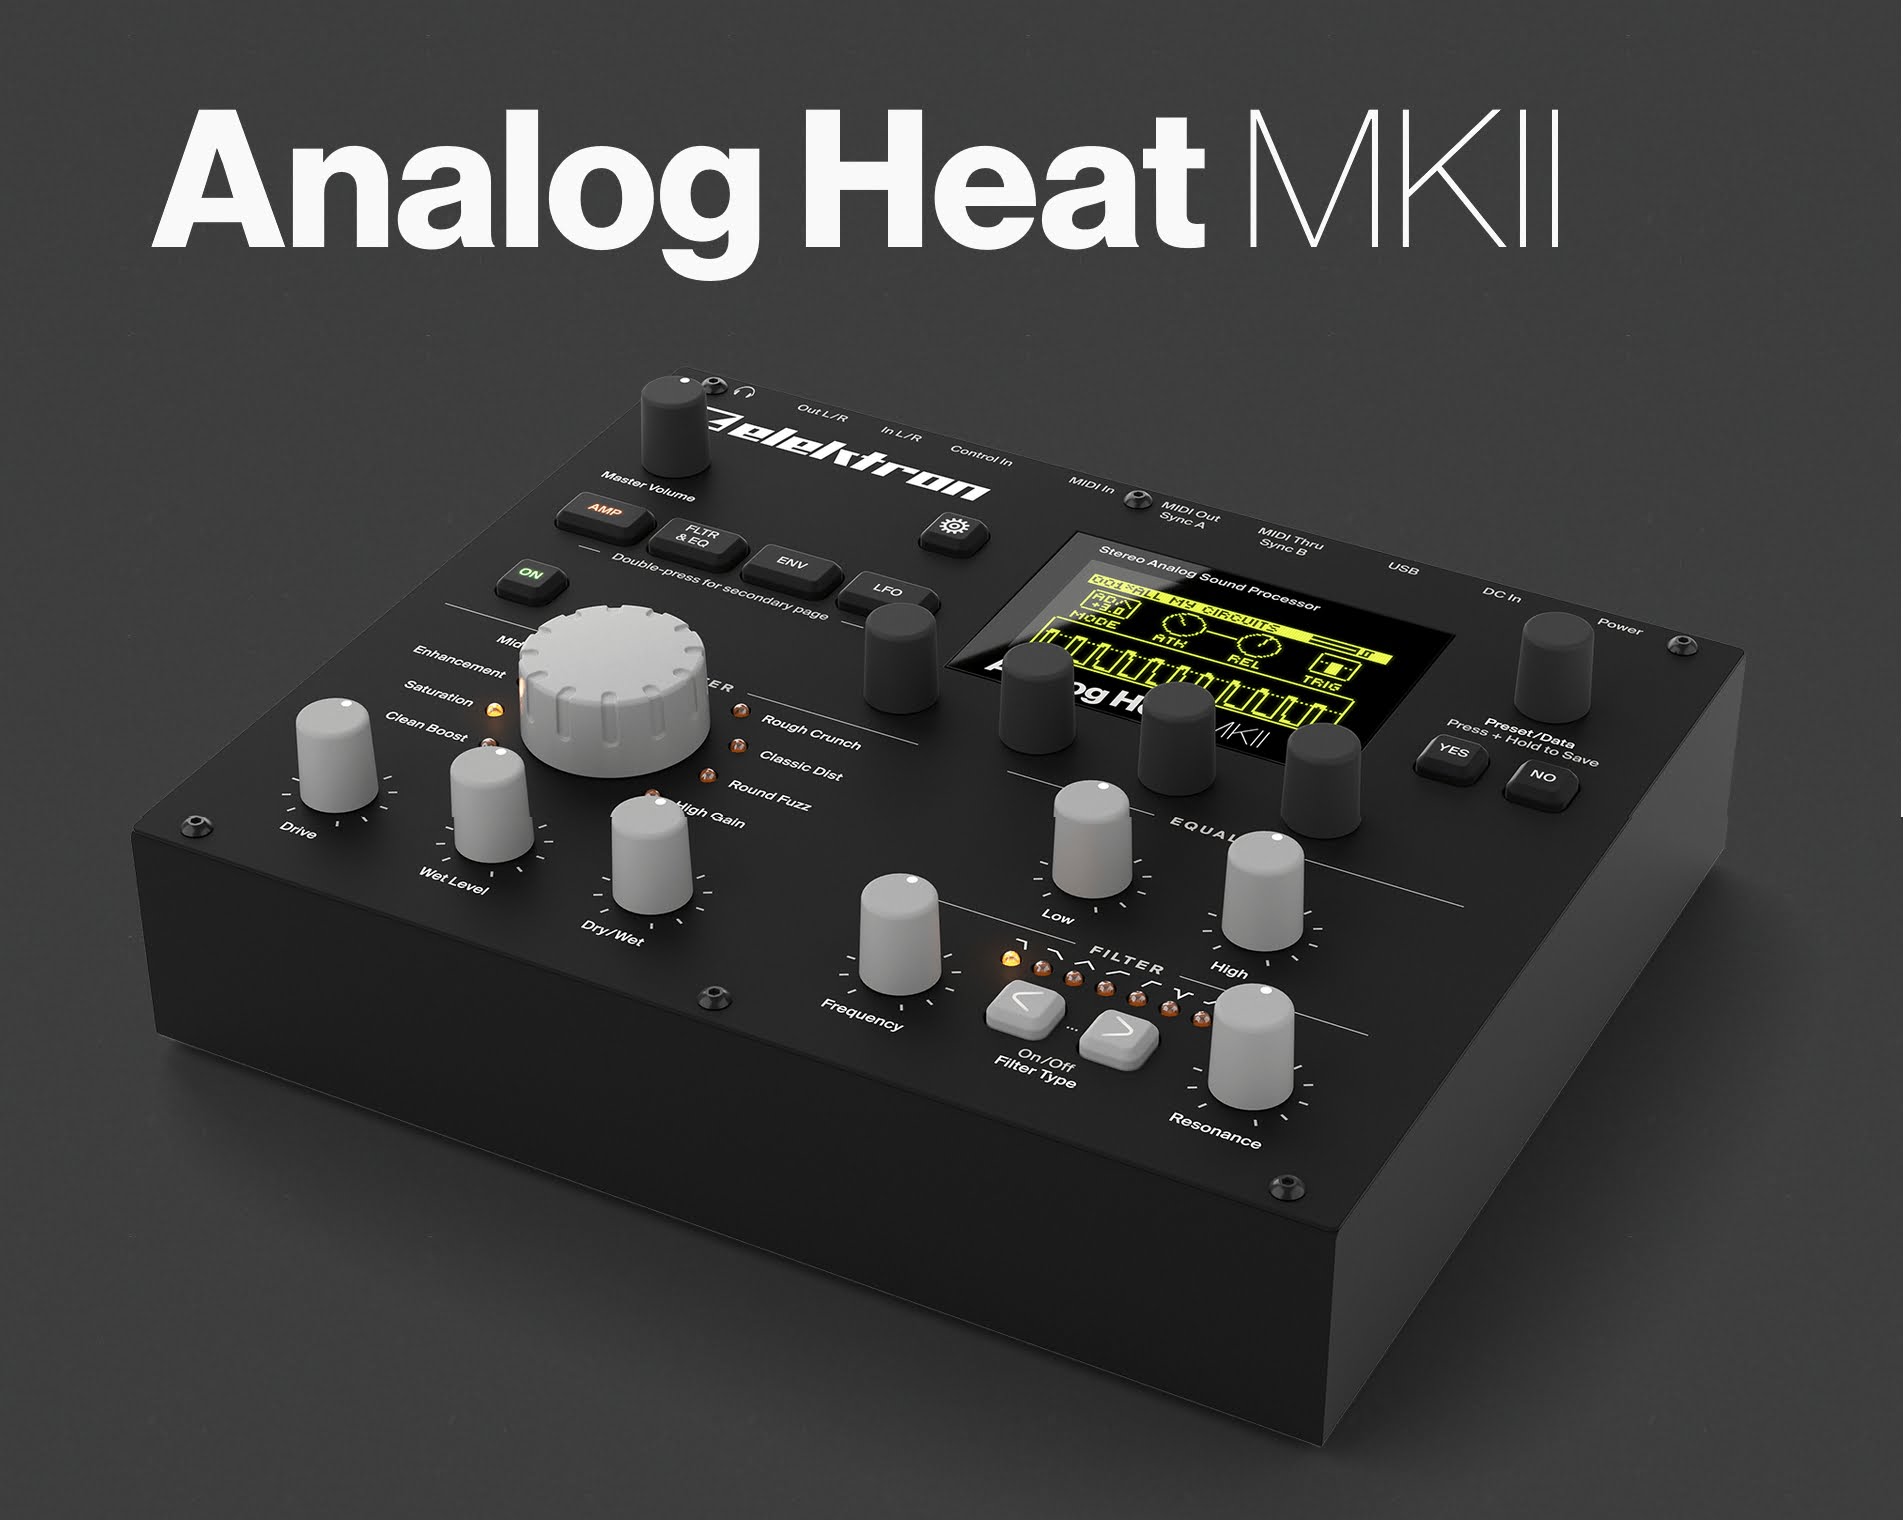 Elektron launches Analog Heat MKII sound processing unit